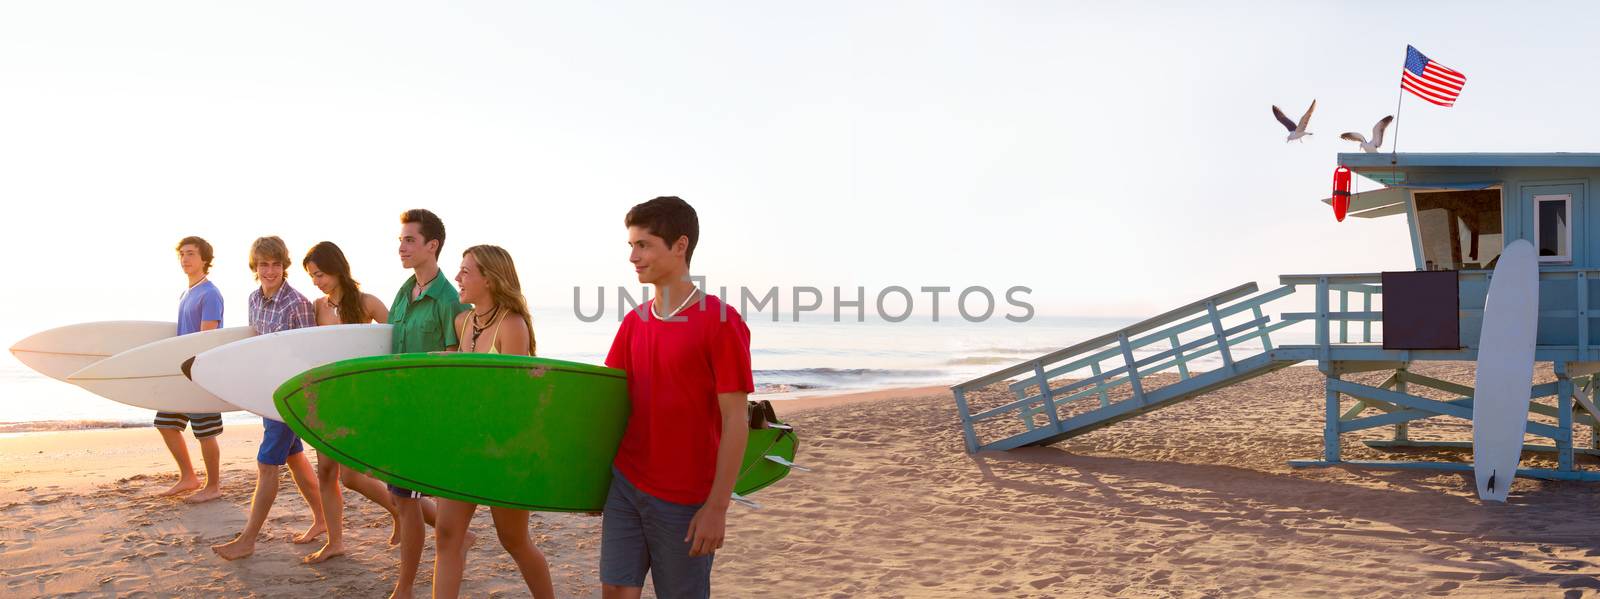 Surfer teenagers boys and girls walking on California beach at Santa Monica